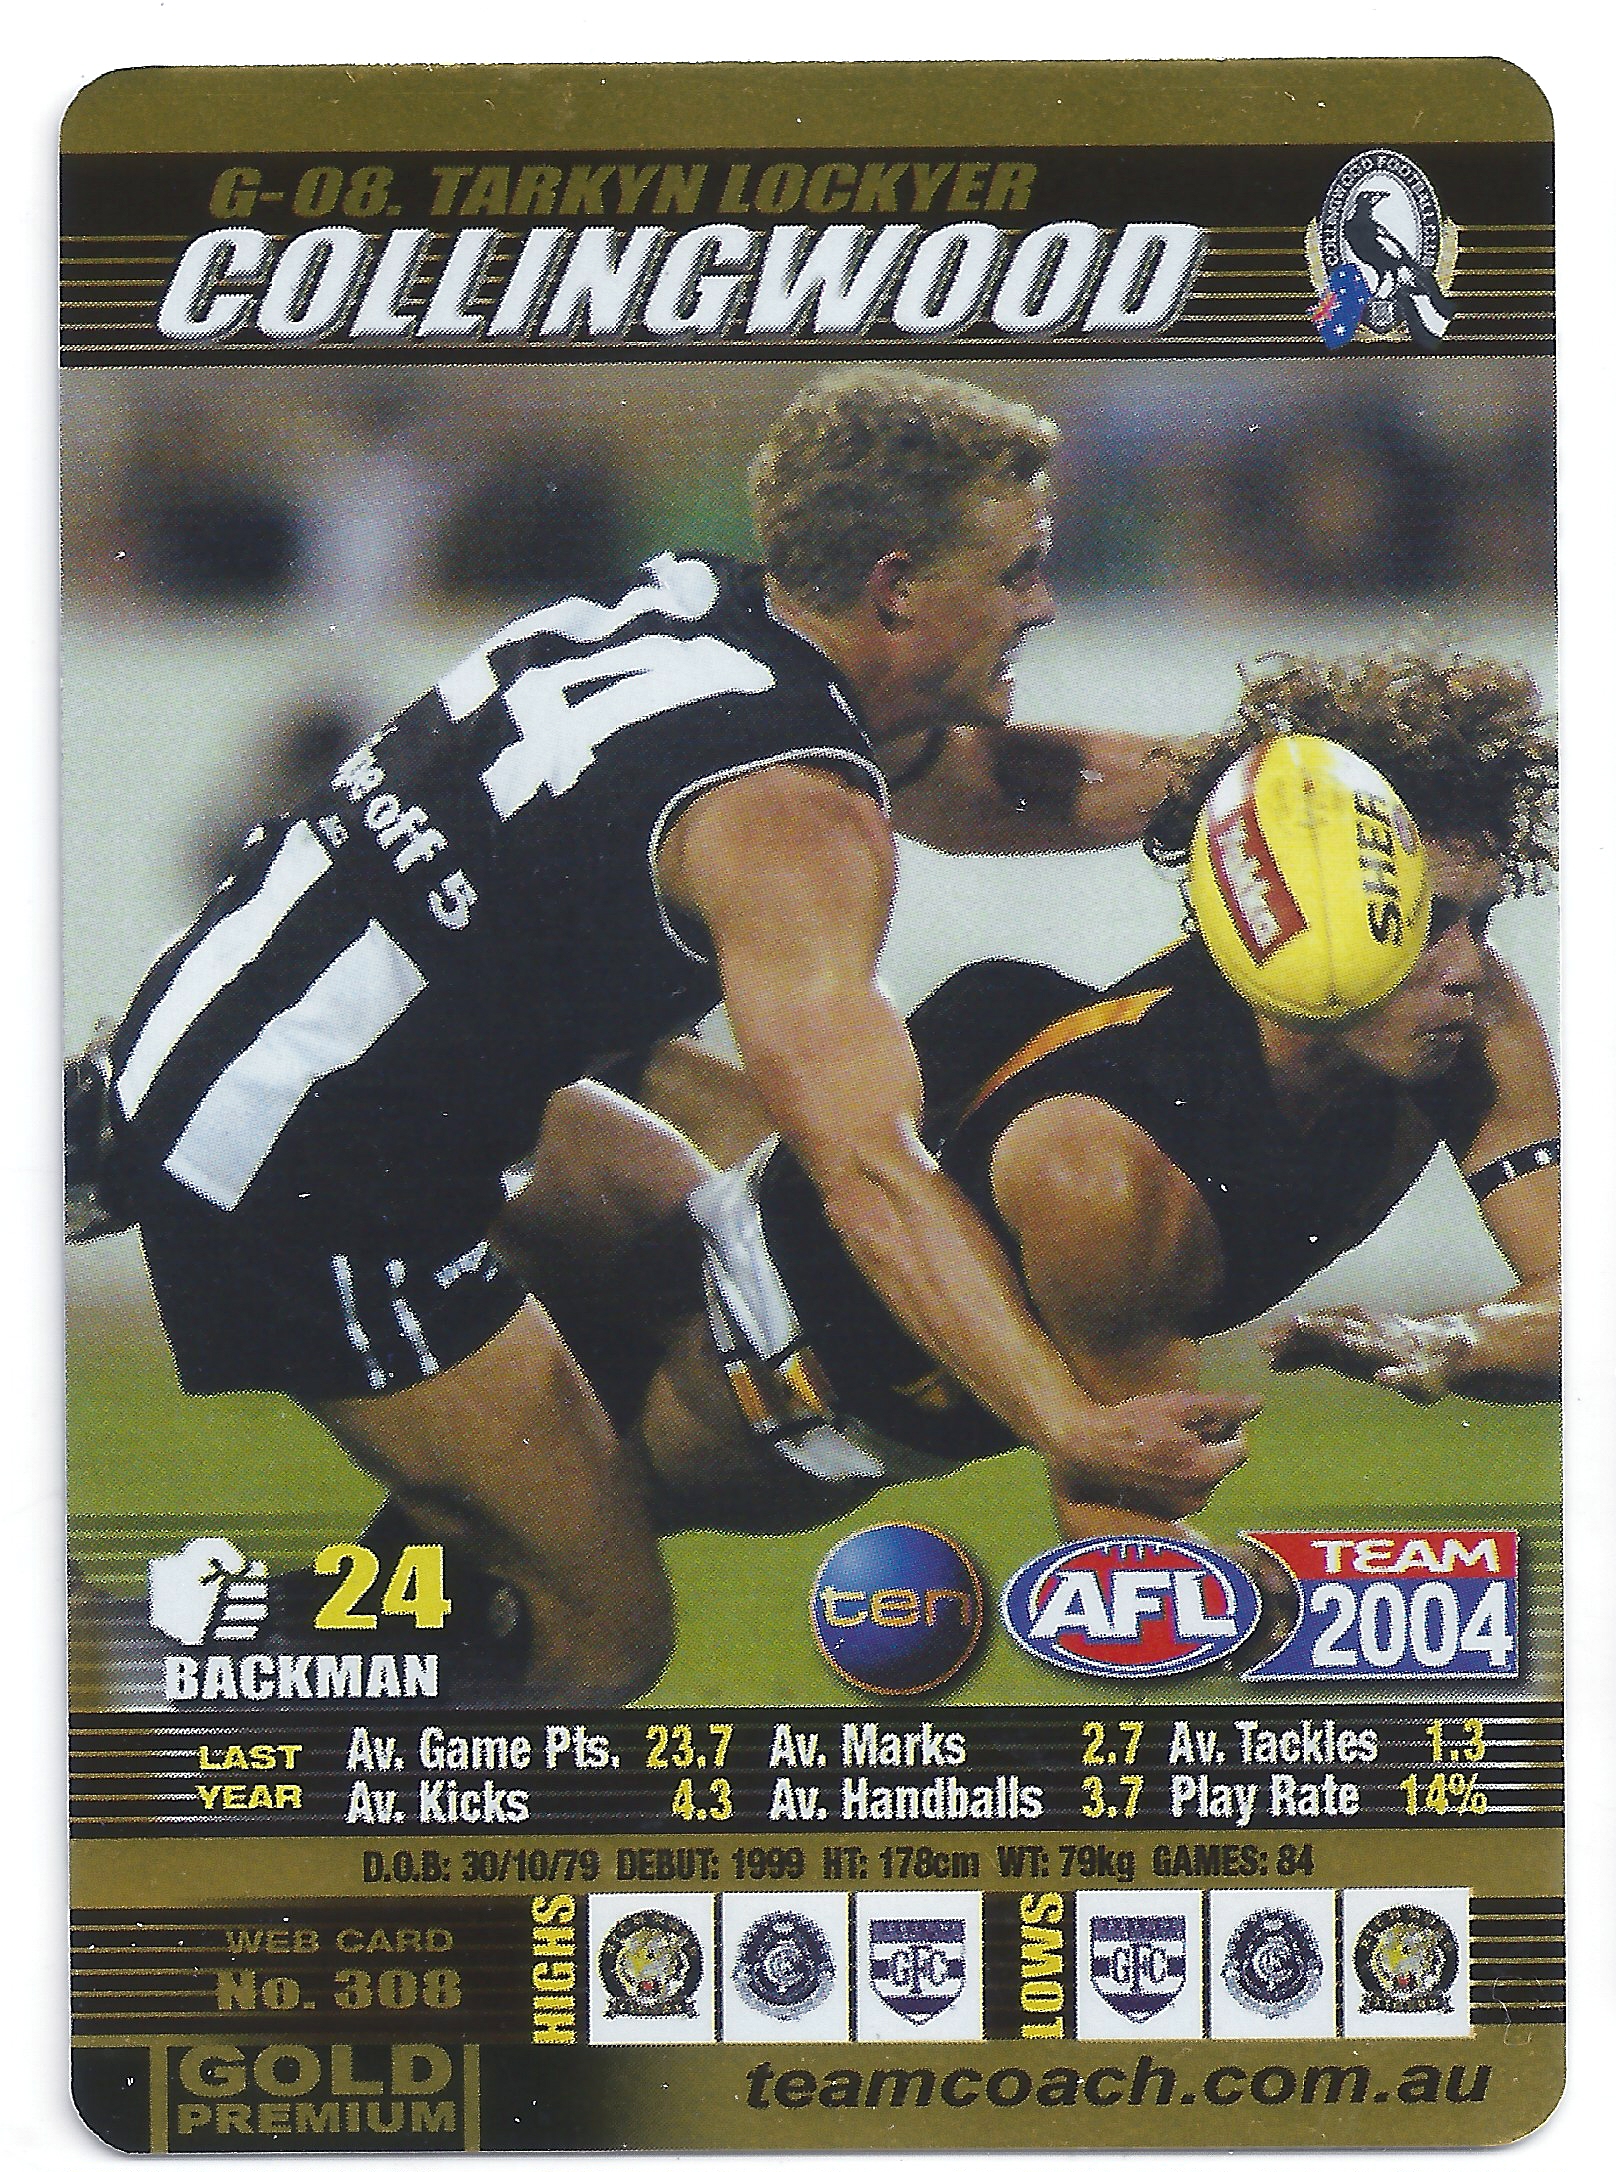 2004 Teamcoach Gold (G-08) Tarkyn Lockyer Collingwood